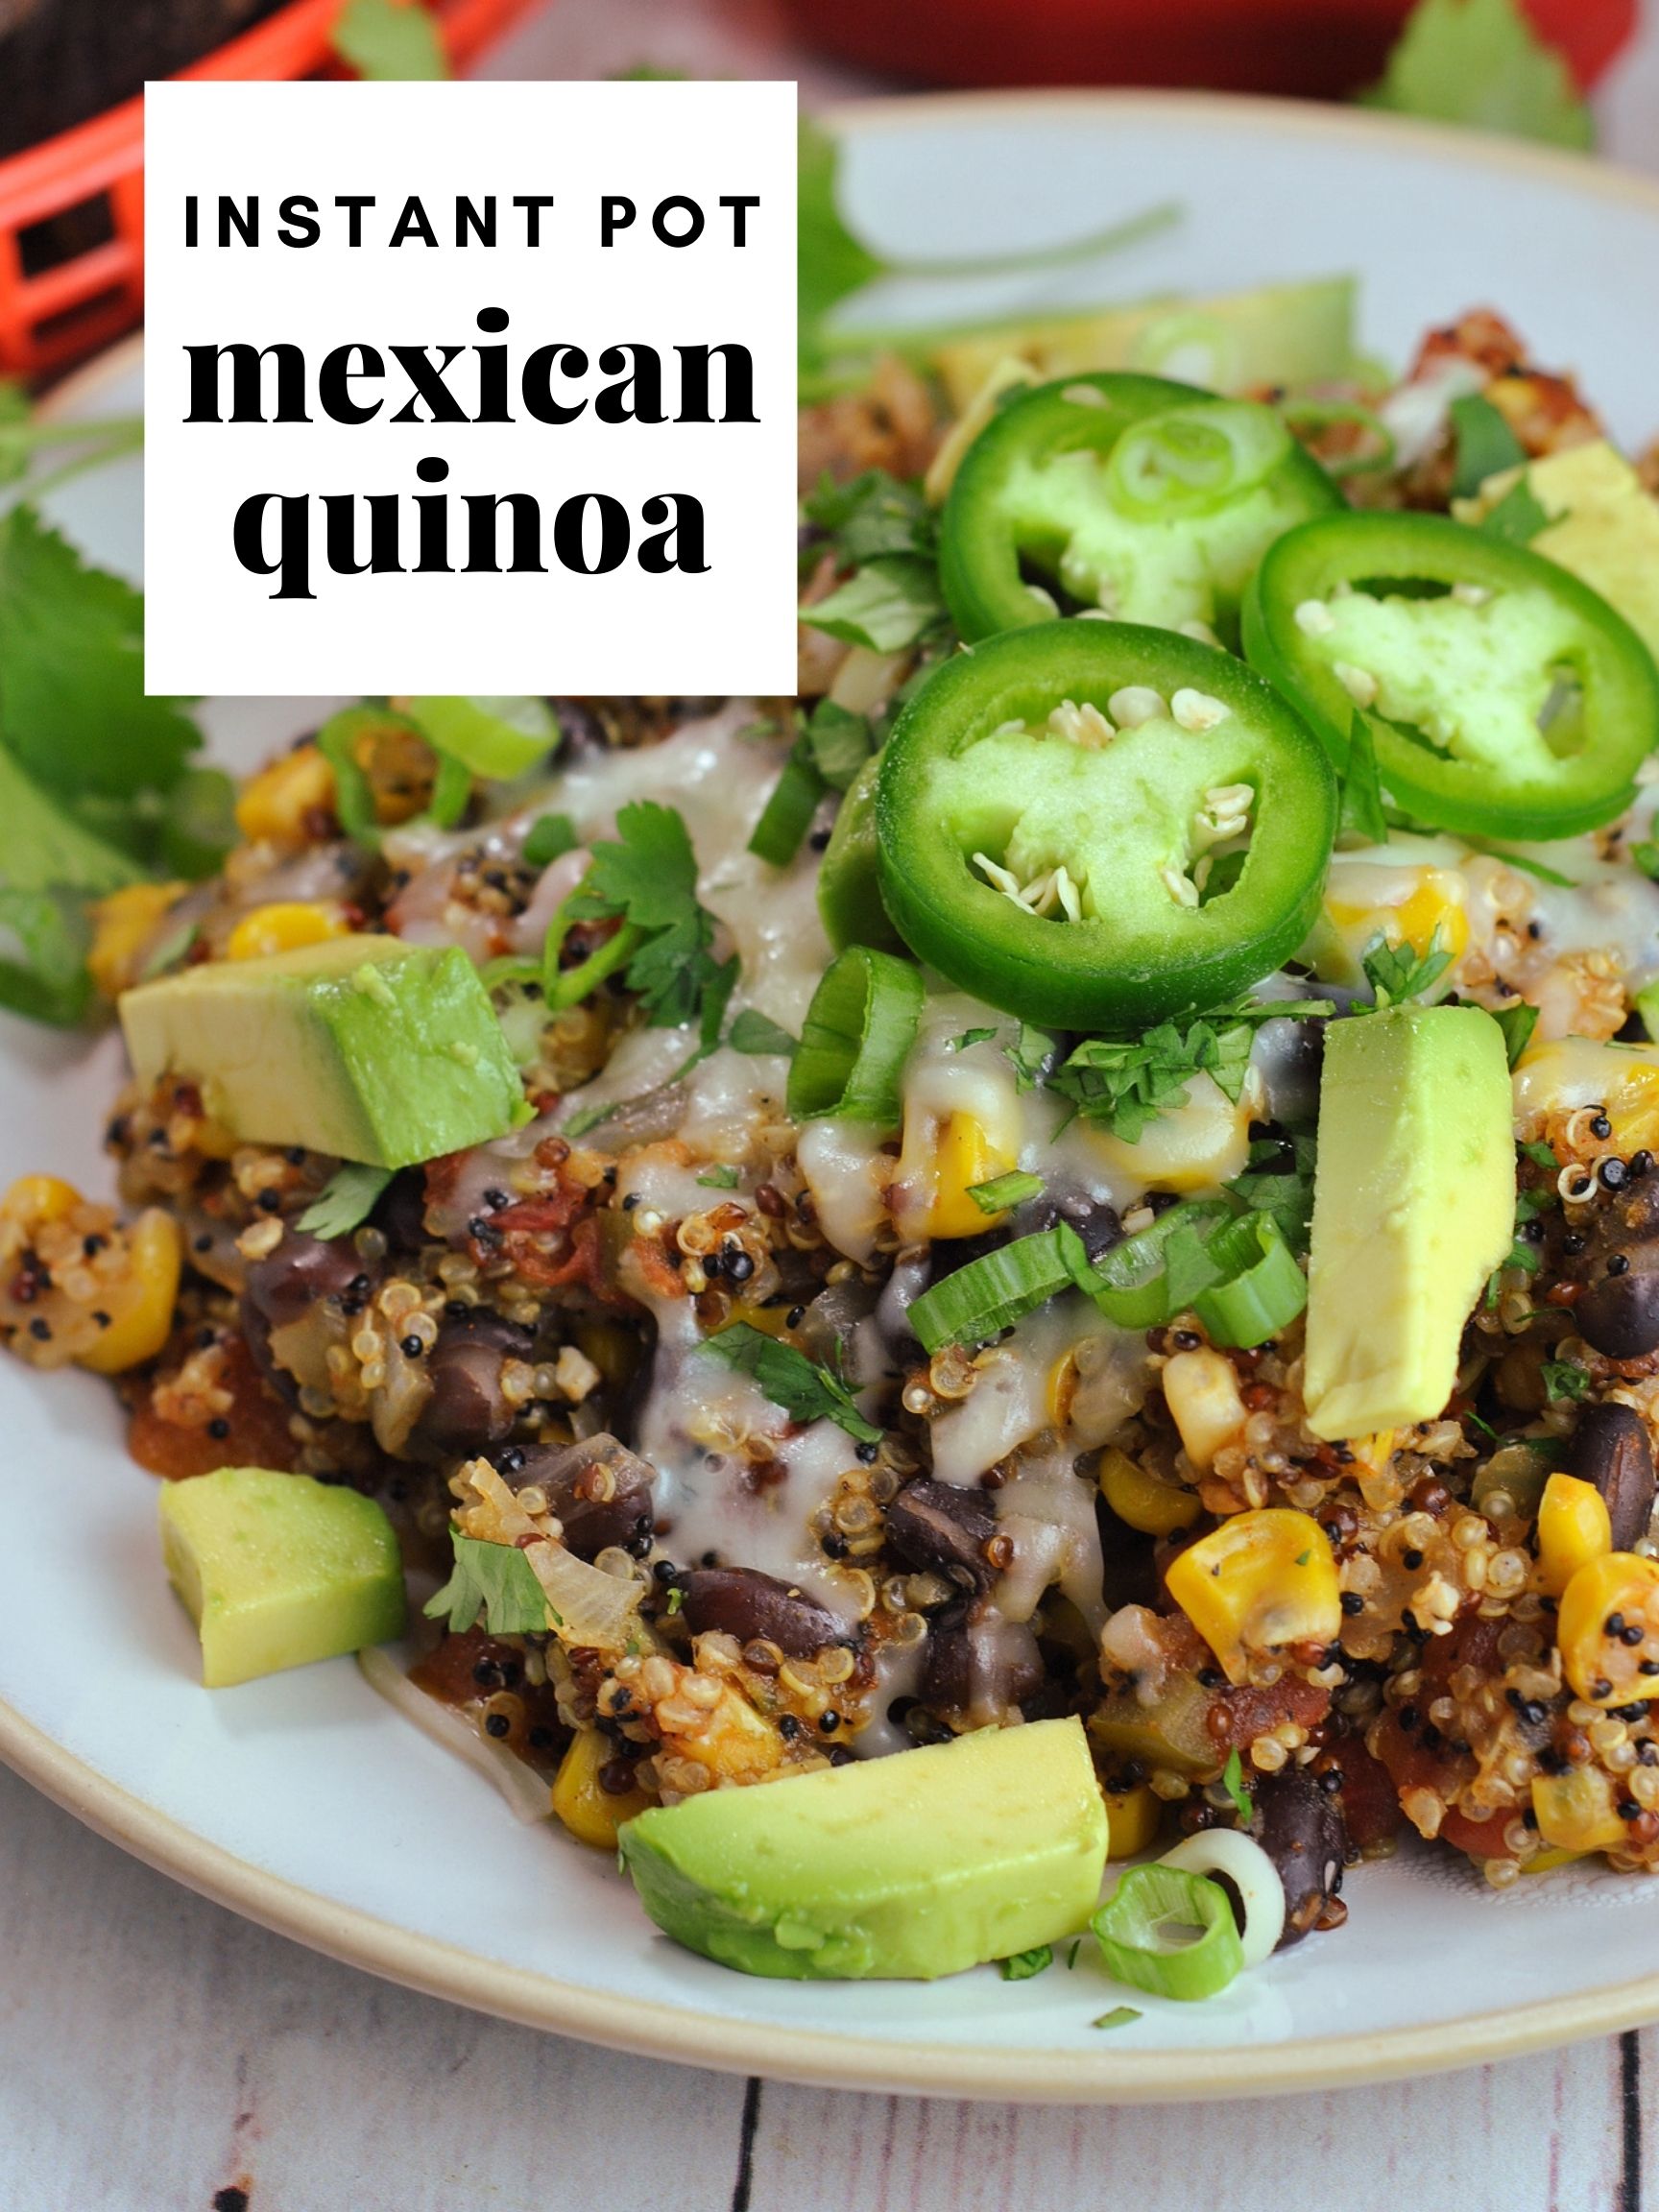 Instant Pot Mexican Quinoa via @preventionrd